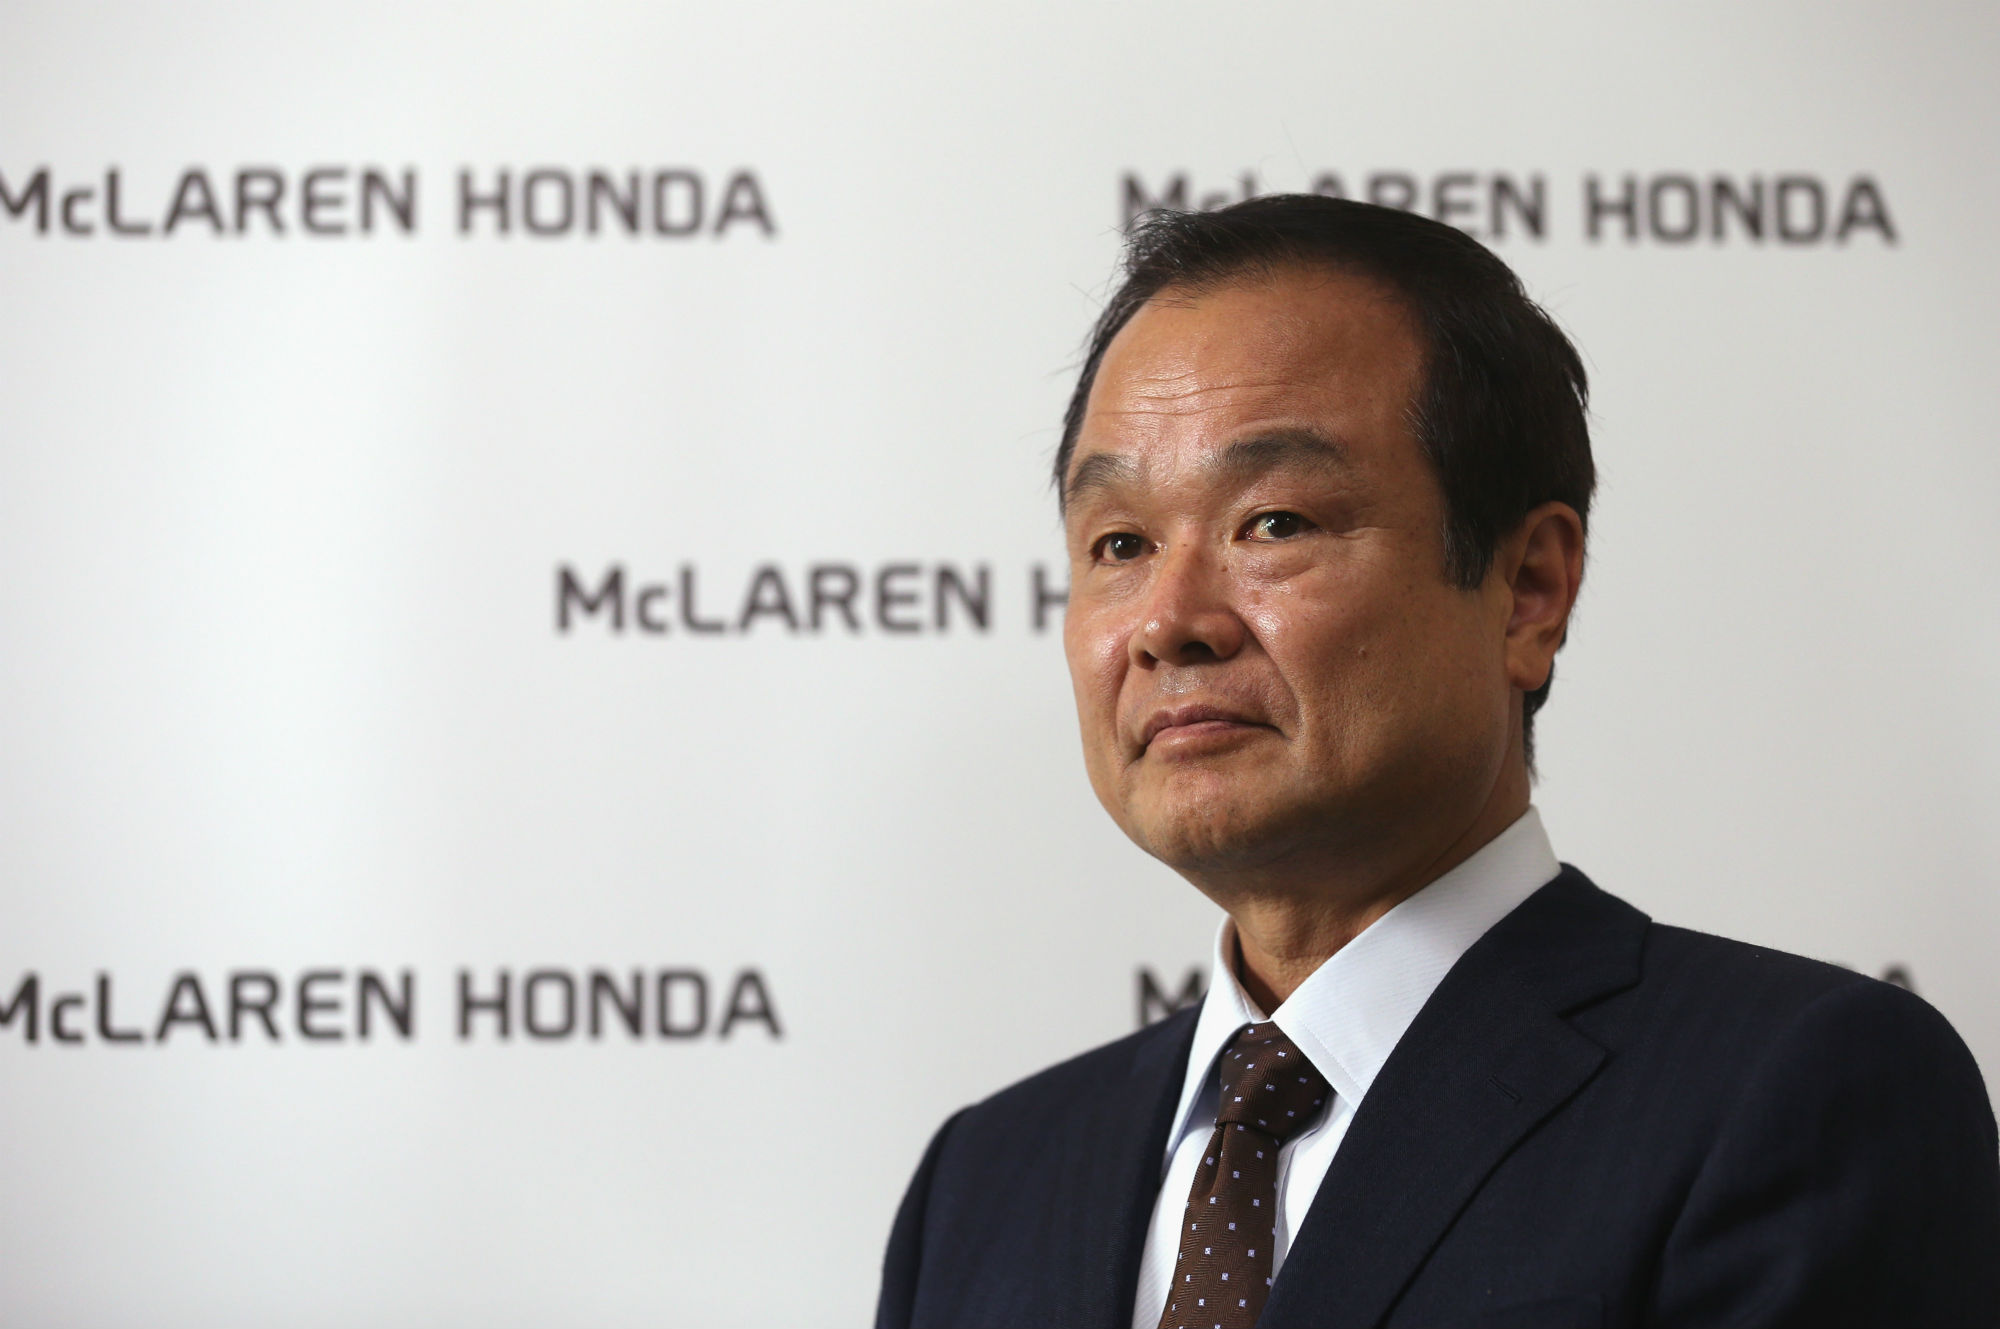 Honda CEO swapped